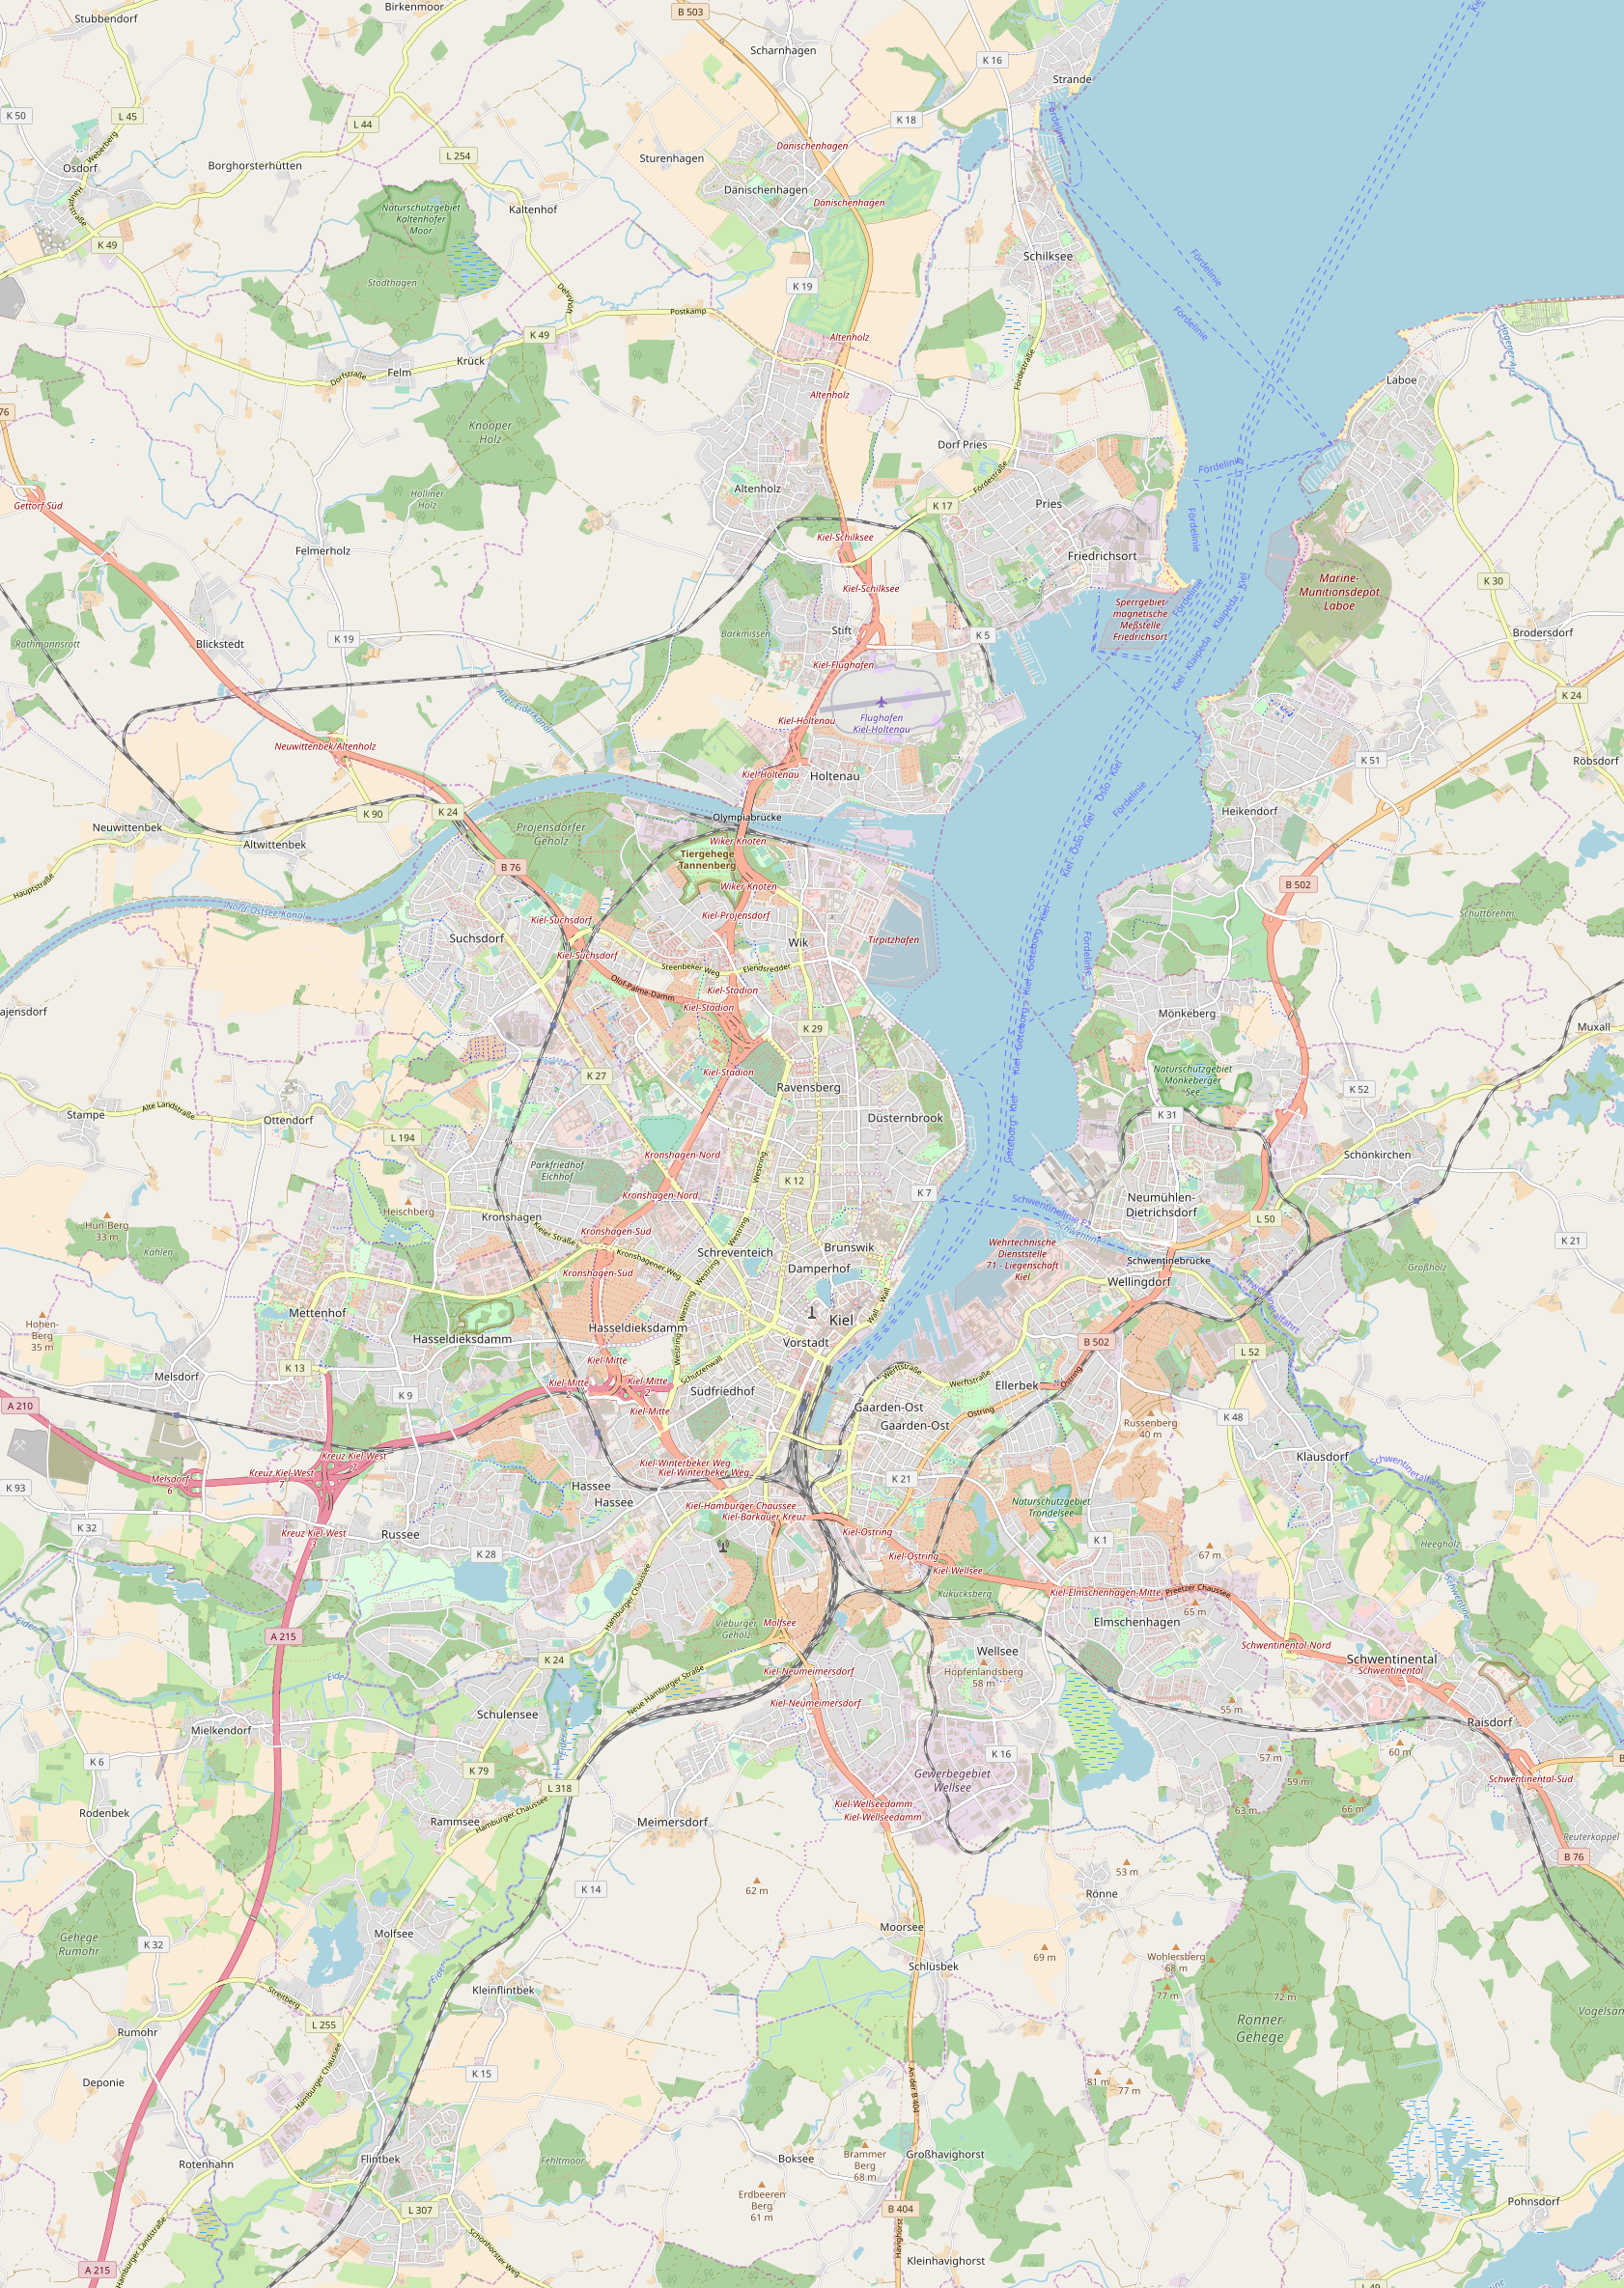 kiel karte File Kiel Map Png Wikimedia Commons kiel karte